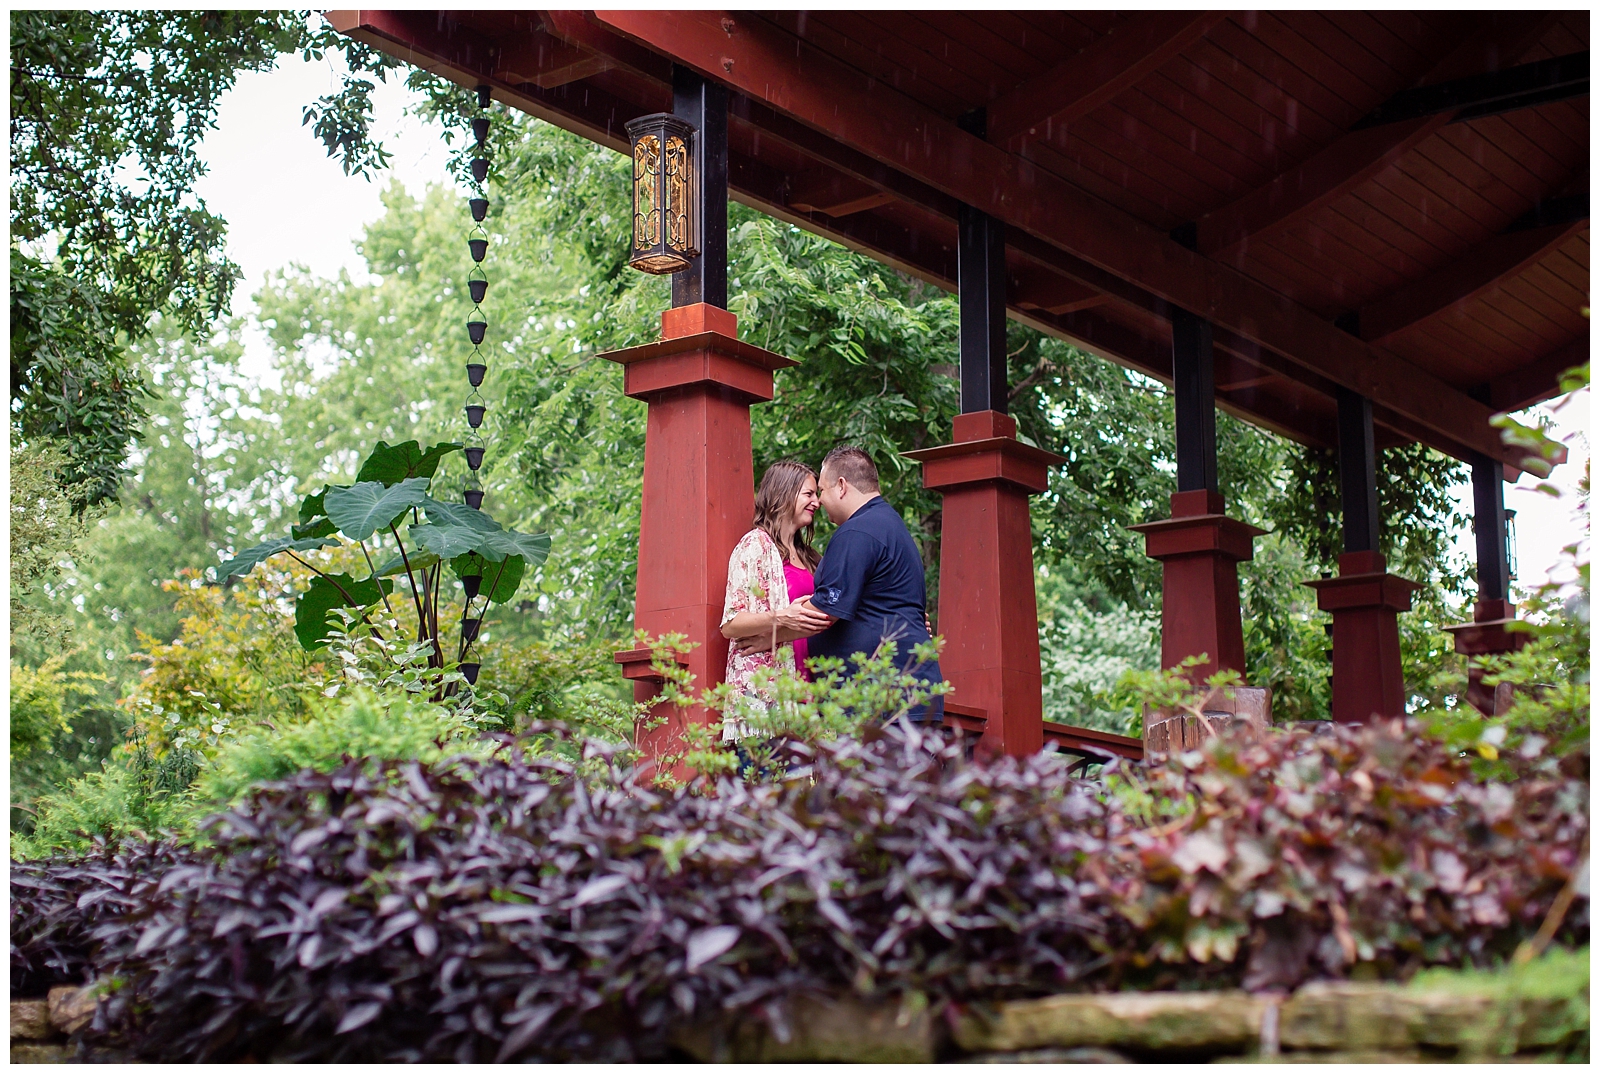 Engagement photography at Lake Shawnee in Topeka, Kansas, by Kansas City wedding photographers Wisdom-Watson Weddings.